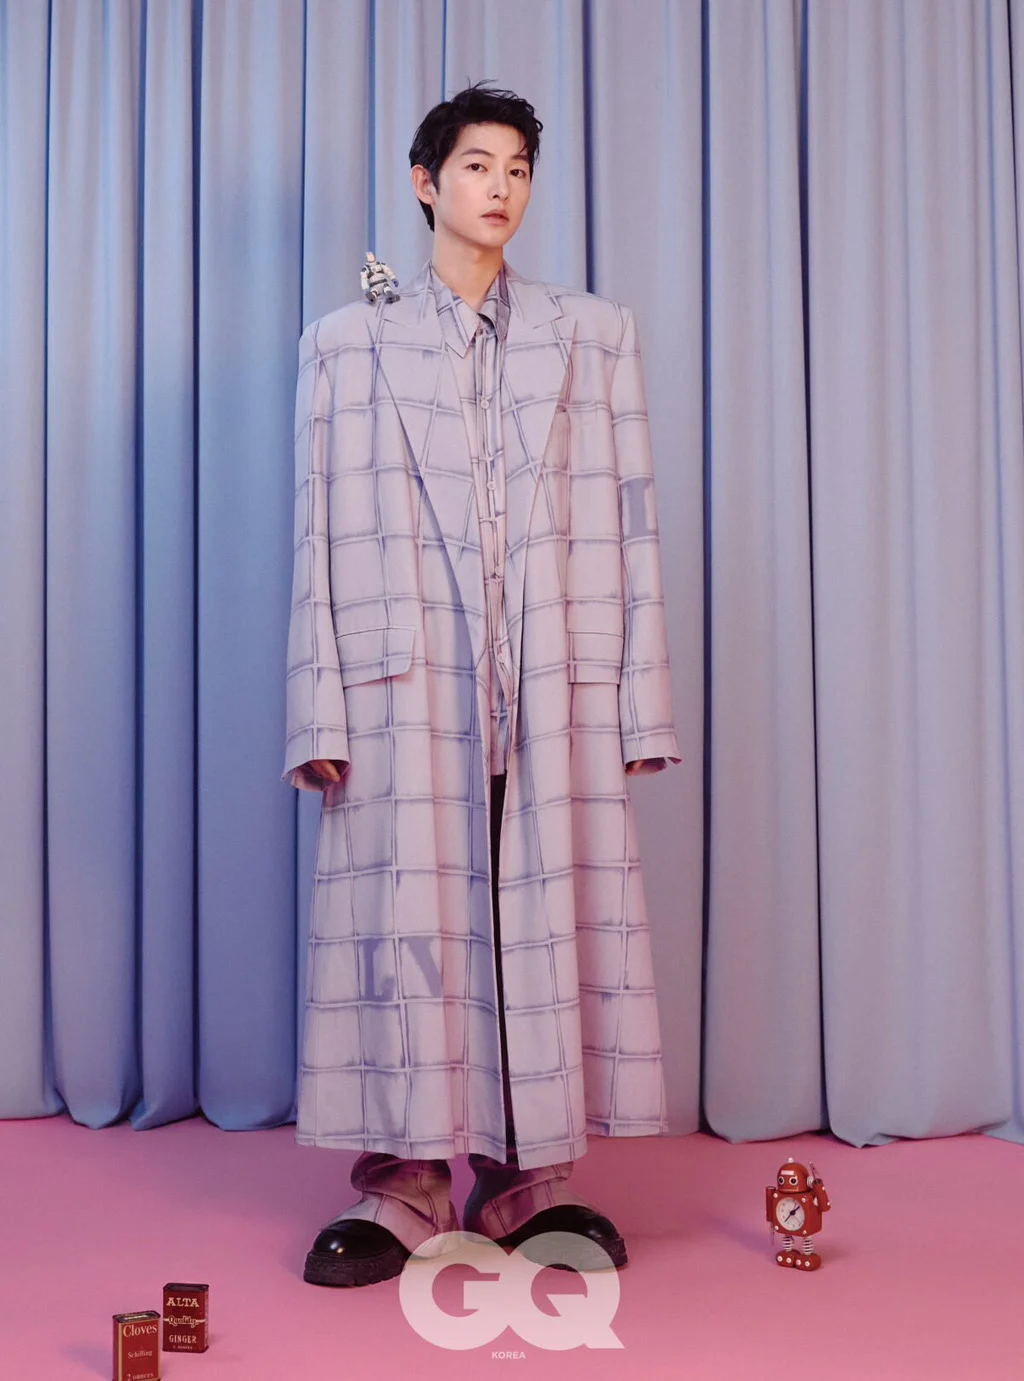 Louis Vuitton names Song Joong-ki brand ambassador